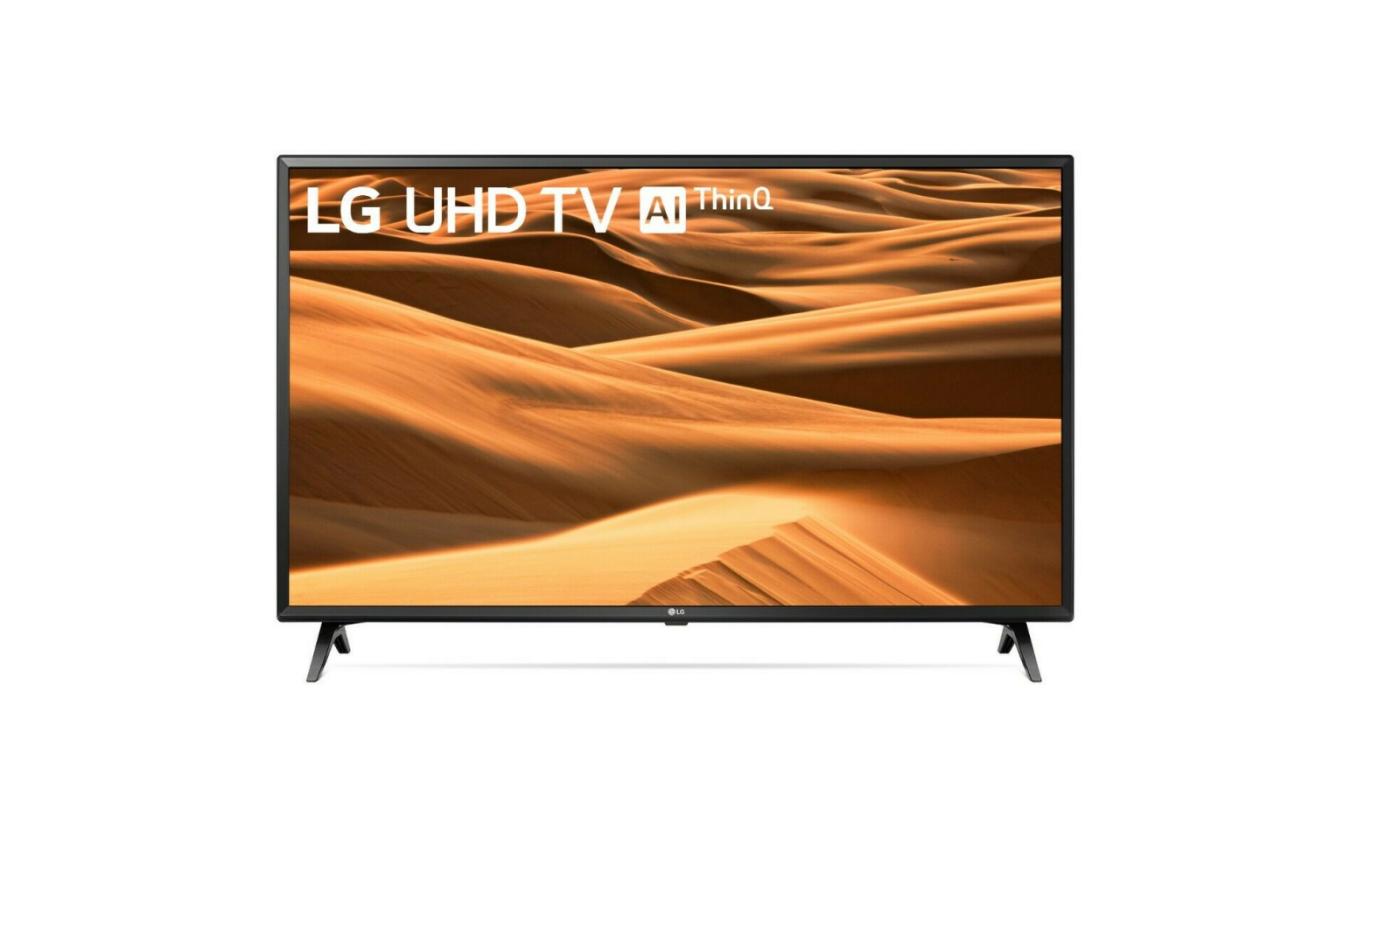 LG Smart TV 70″ LED IPS Ultra HD 4K web OS 4.5 New 70UM7380 ...